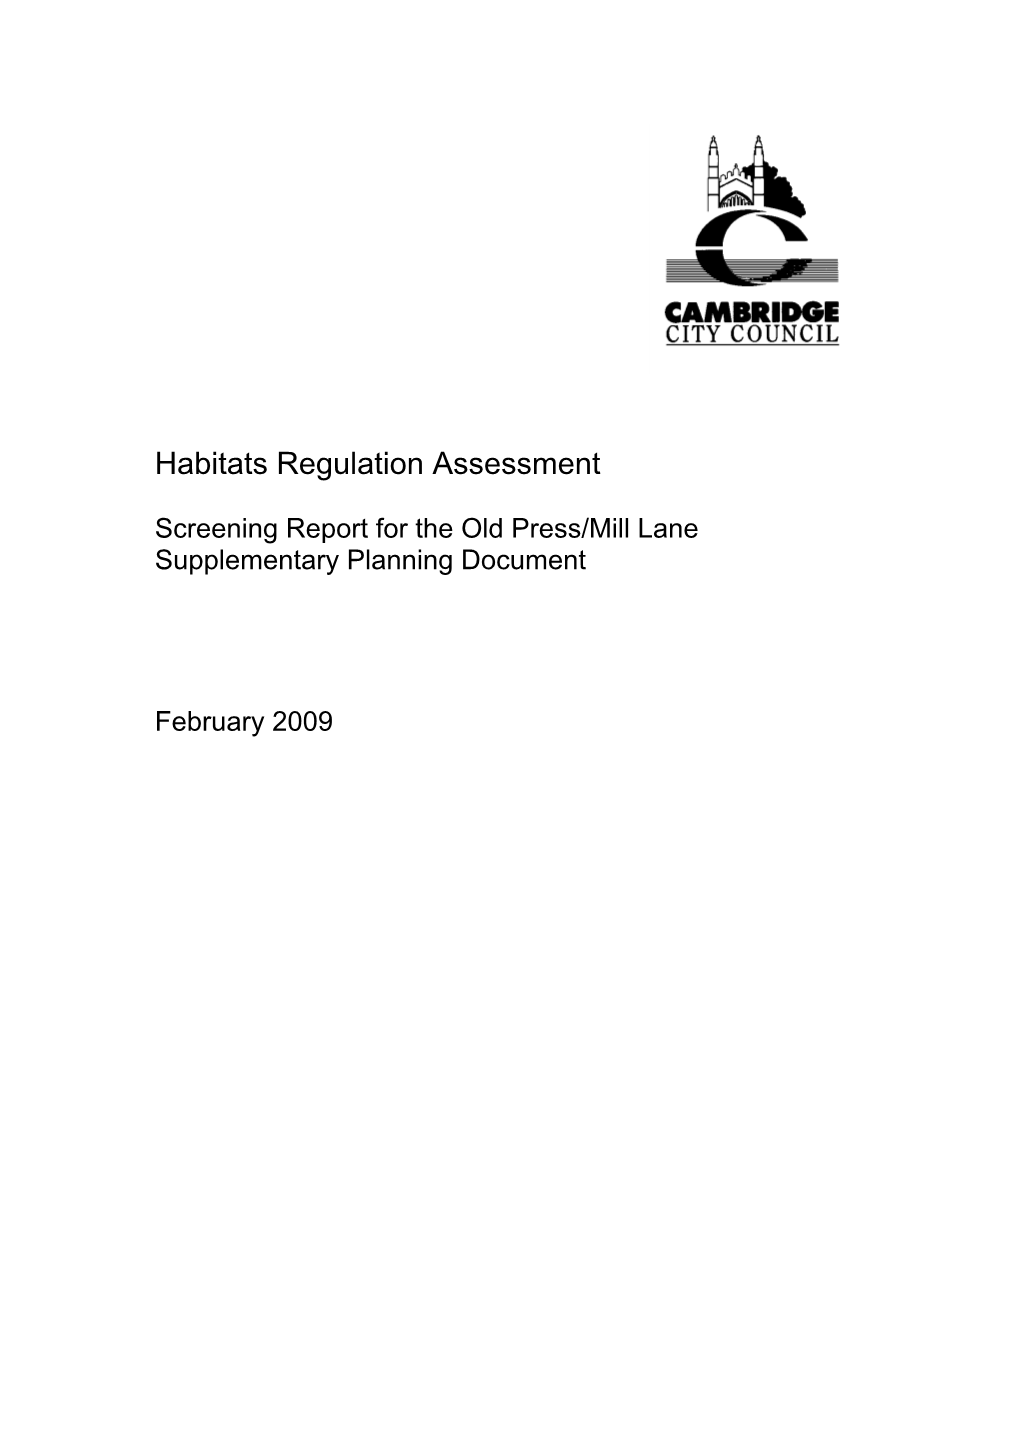 Habitats Regulation Screening Assessment Report